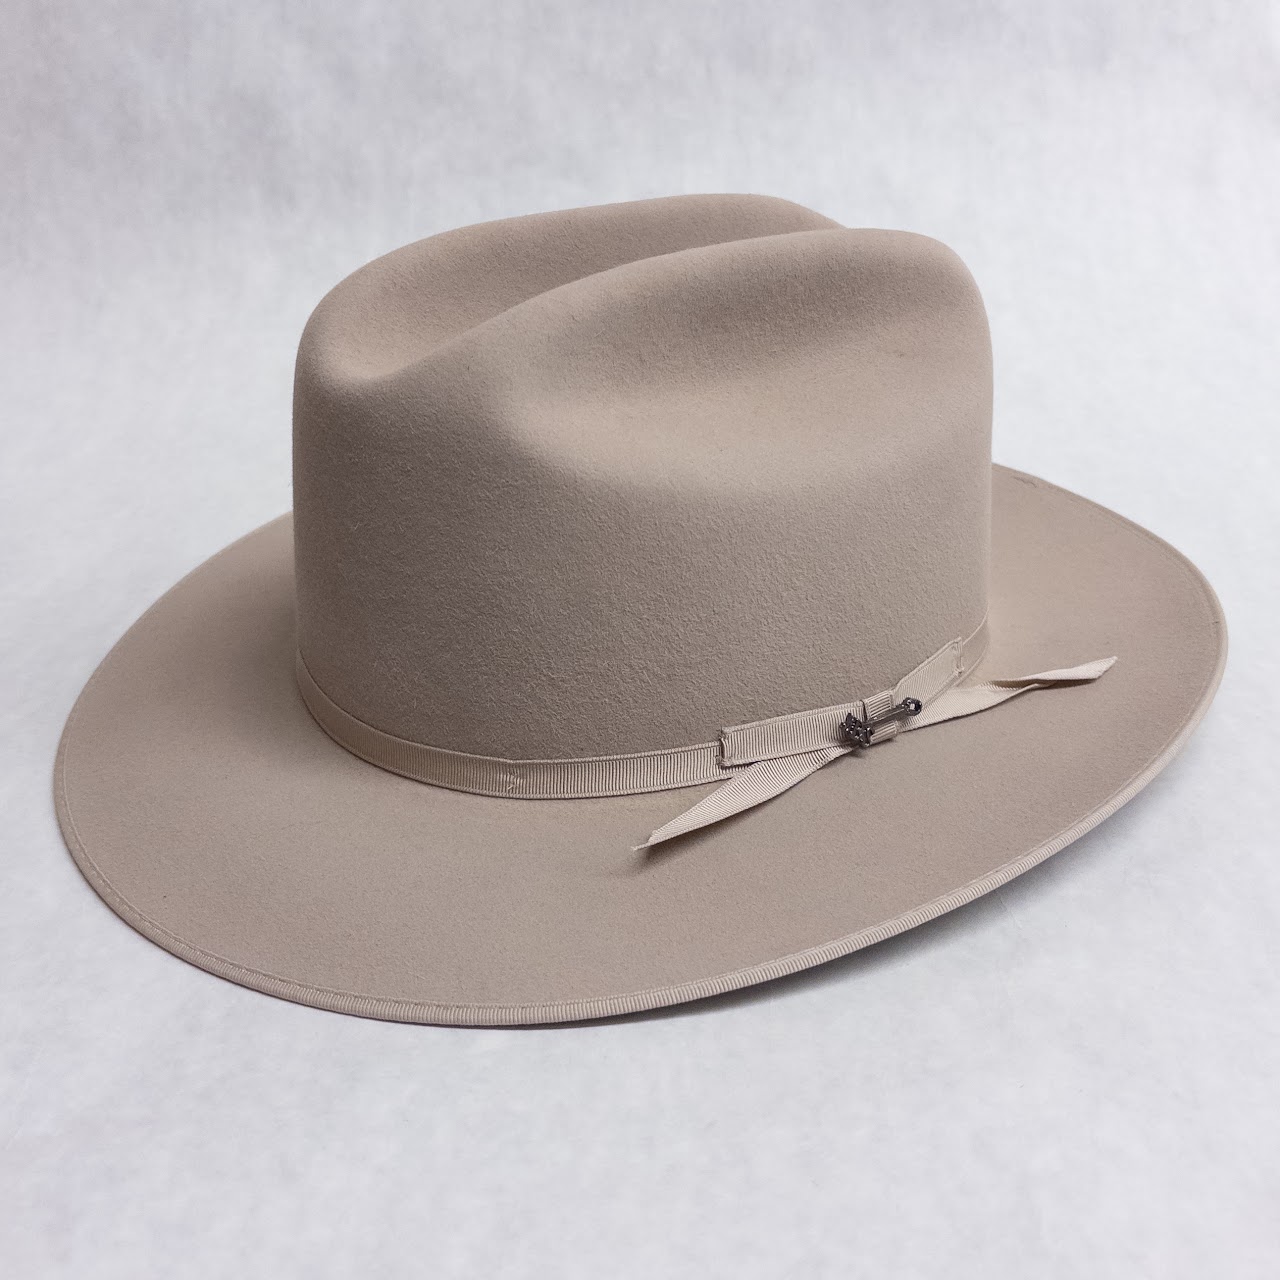 Stetson 150th Anniversary Open Road Beaver Fur Felt Hat